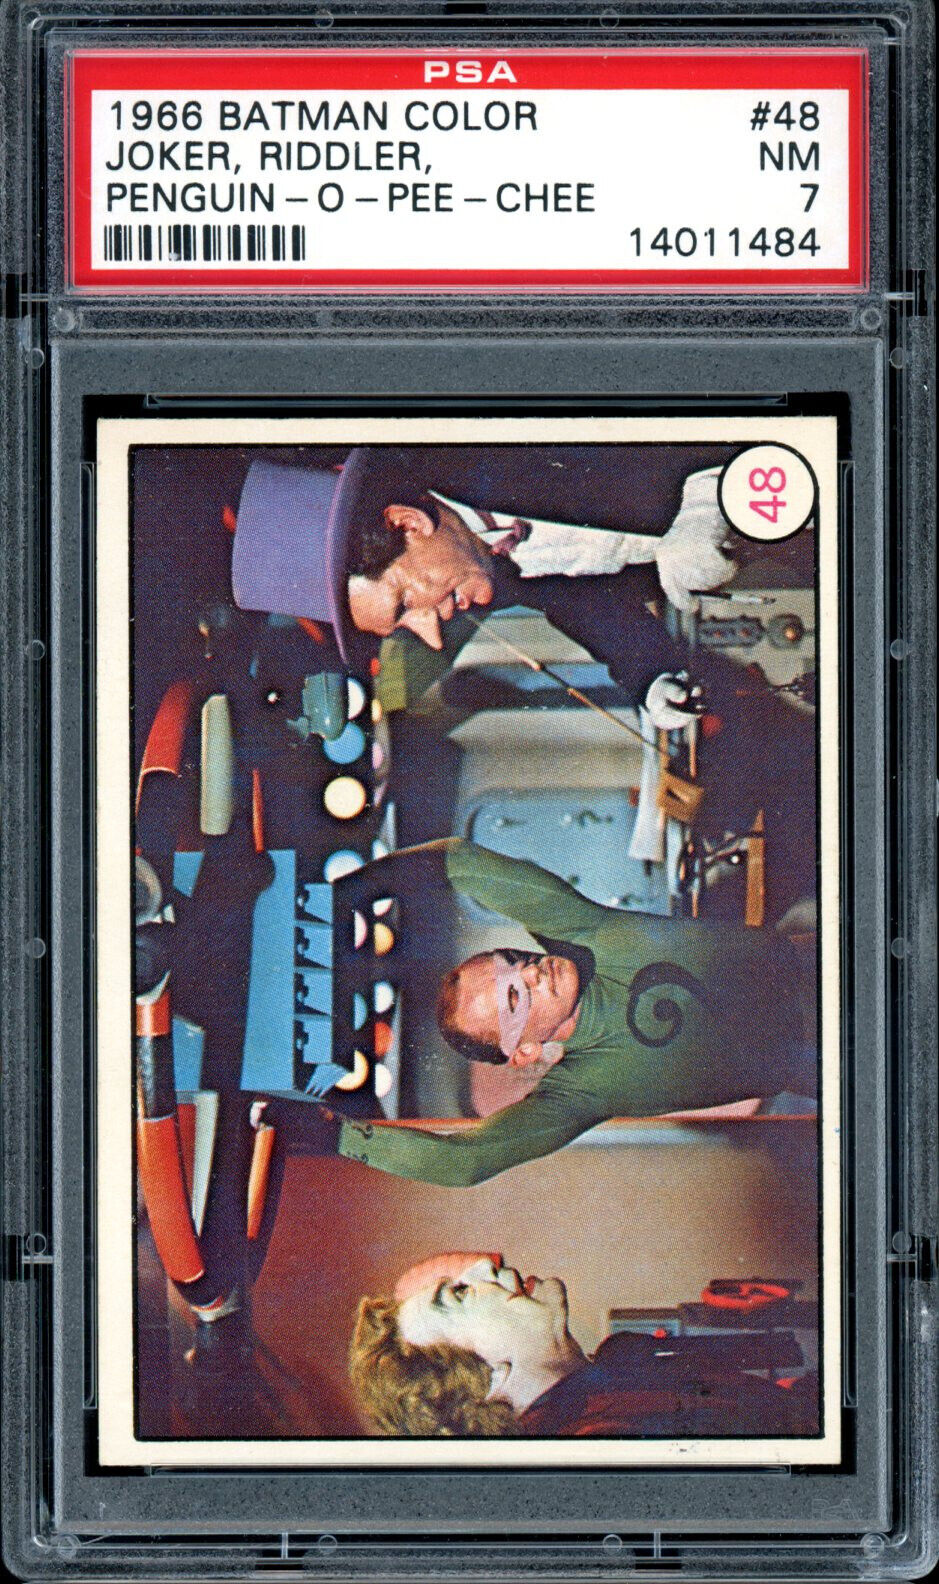 1966 TOPPS OPC (Canada) BATMAN COLOR #48 Joker Riddler Penguin PSA 7 NM Card